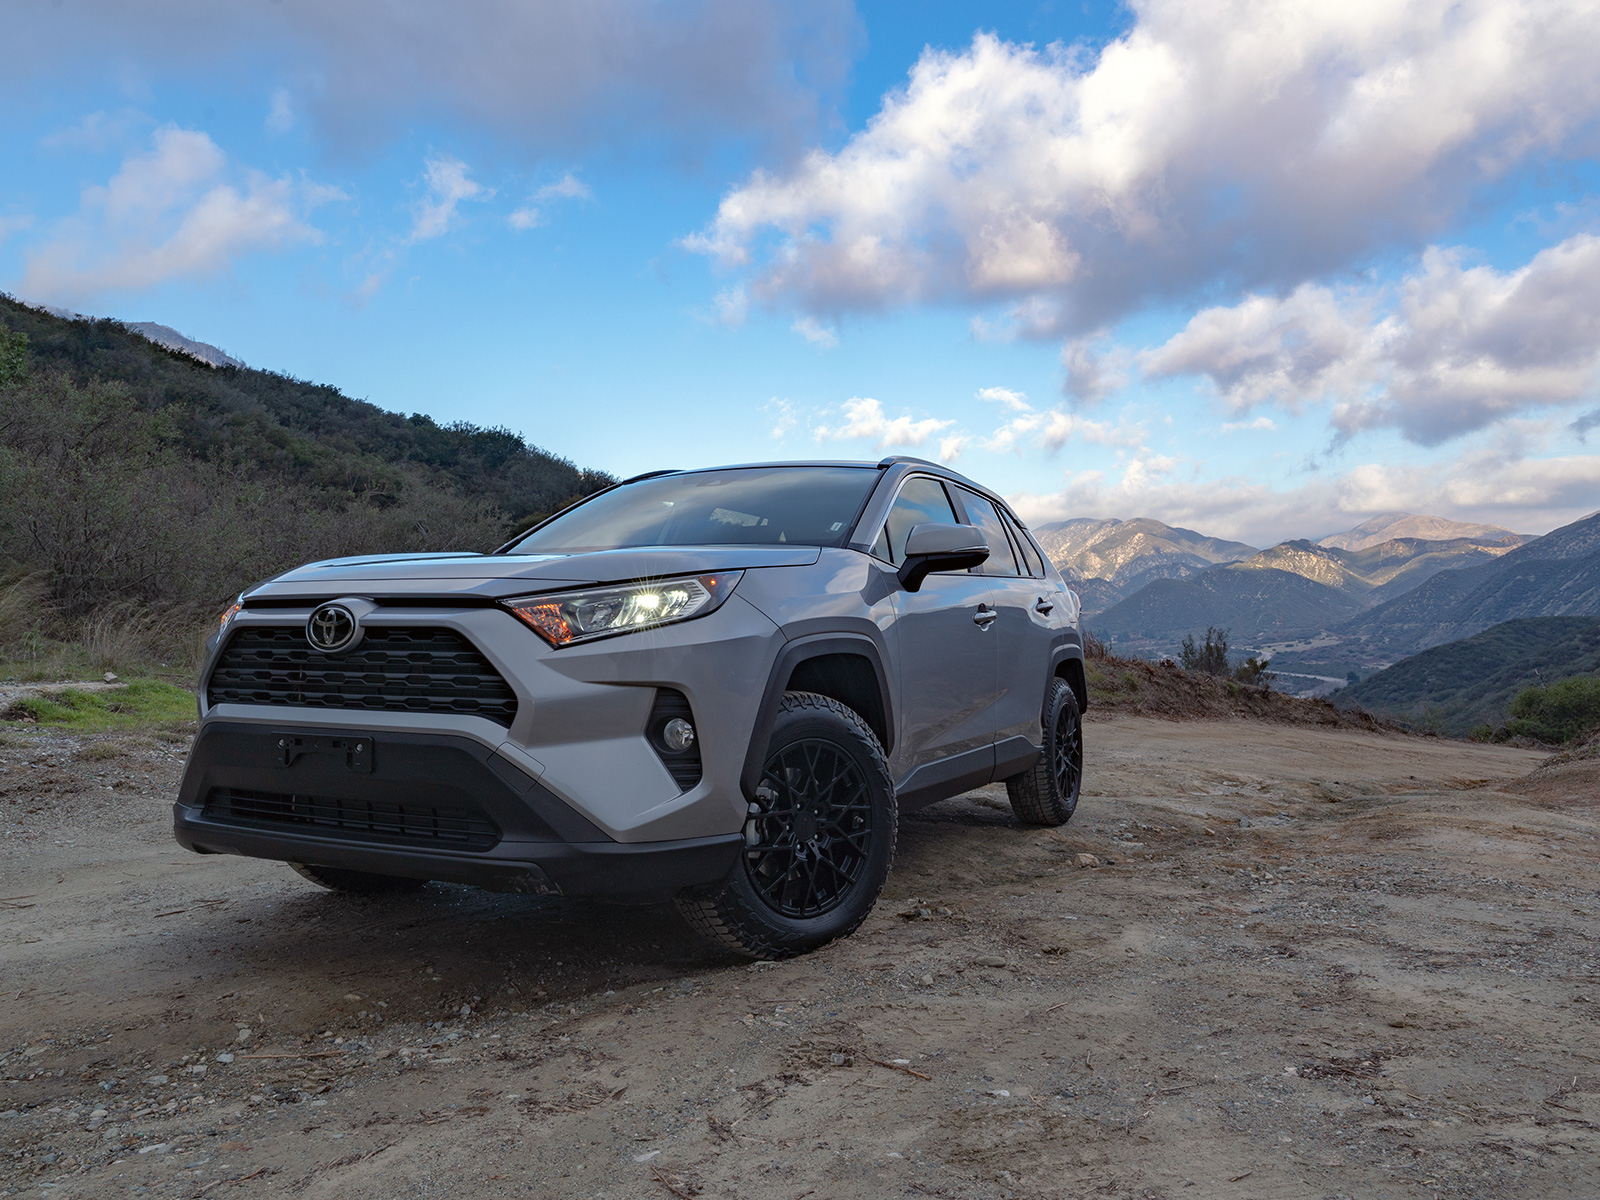 wildpeak all terrain tyres on a new Toyota RAV4 on a dirt mountain road